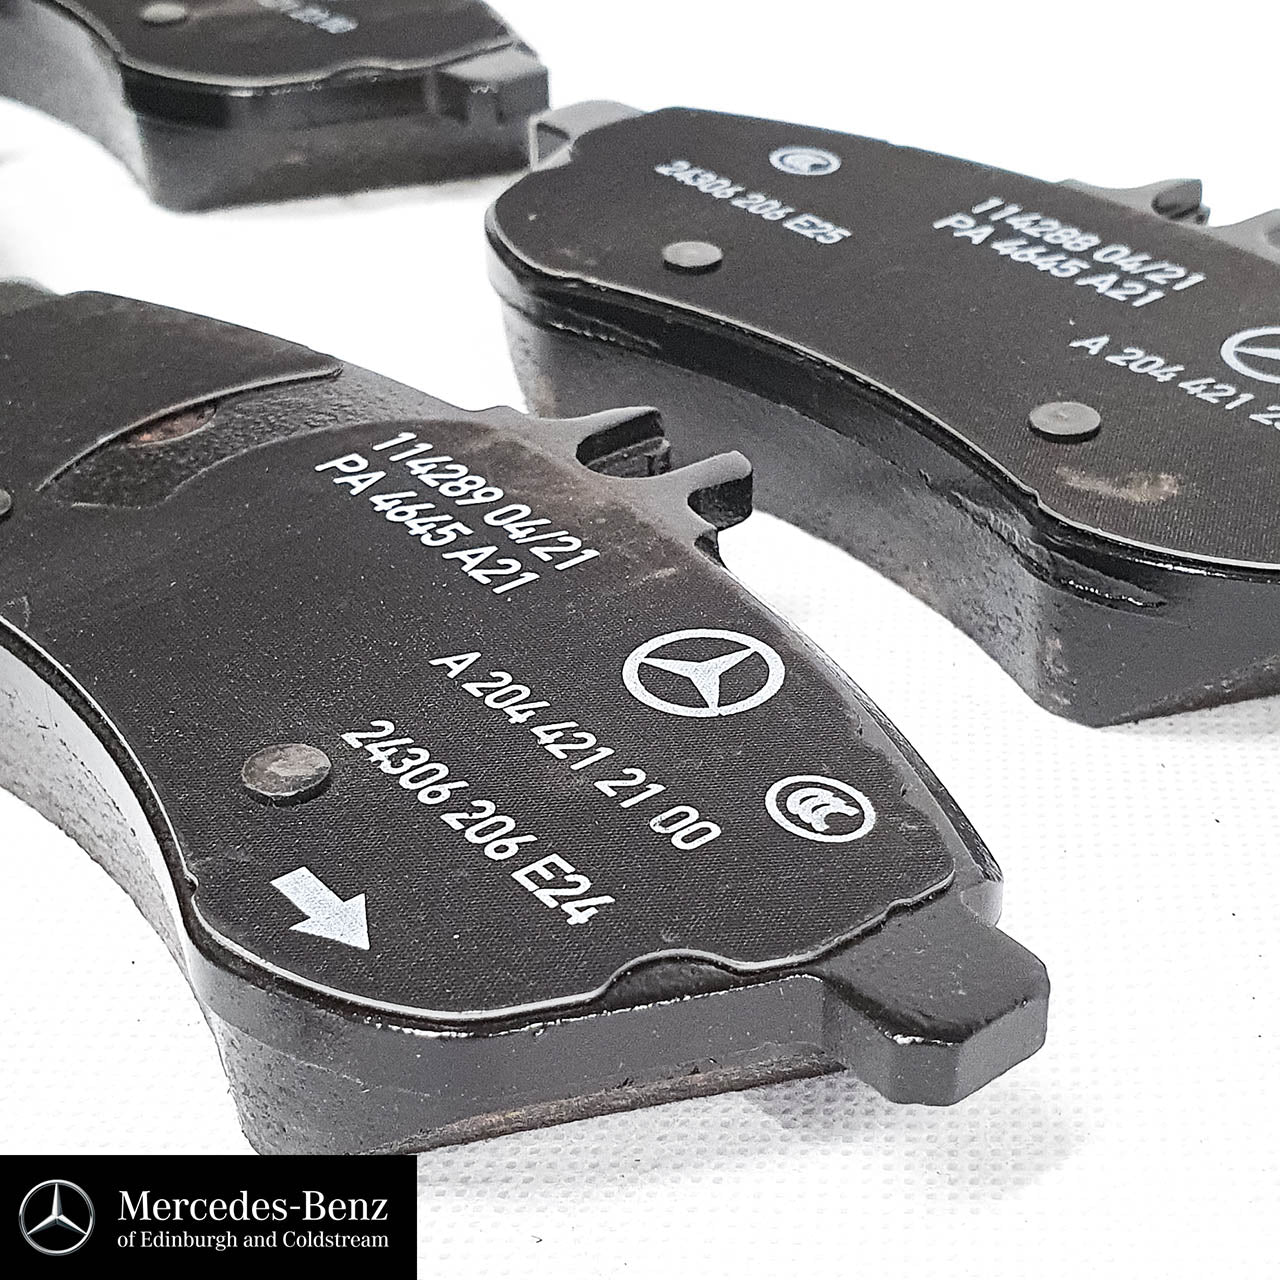 Genuine Mercedes-Benz brake pads set - Front - E Class 212 models